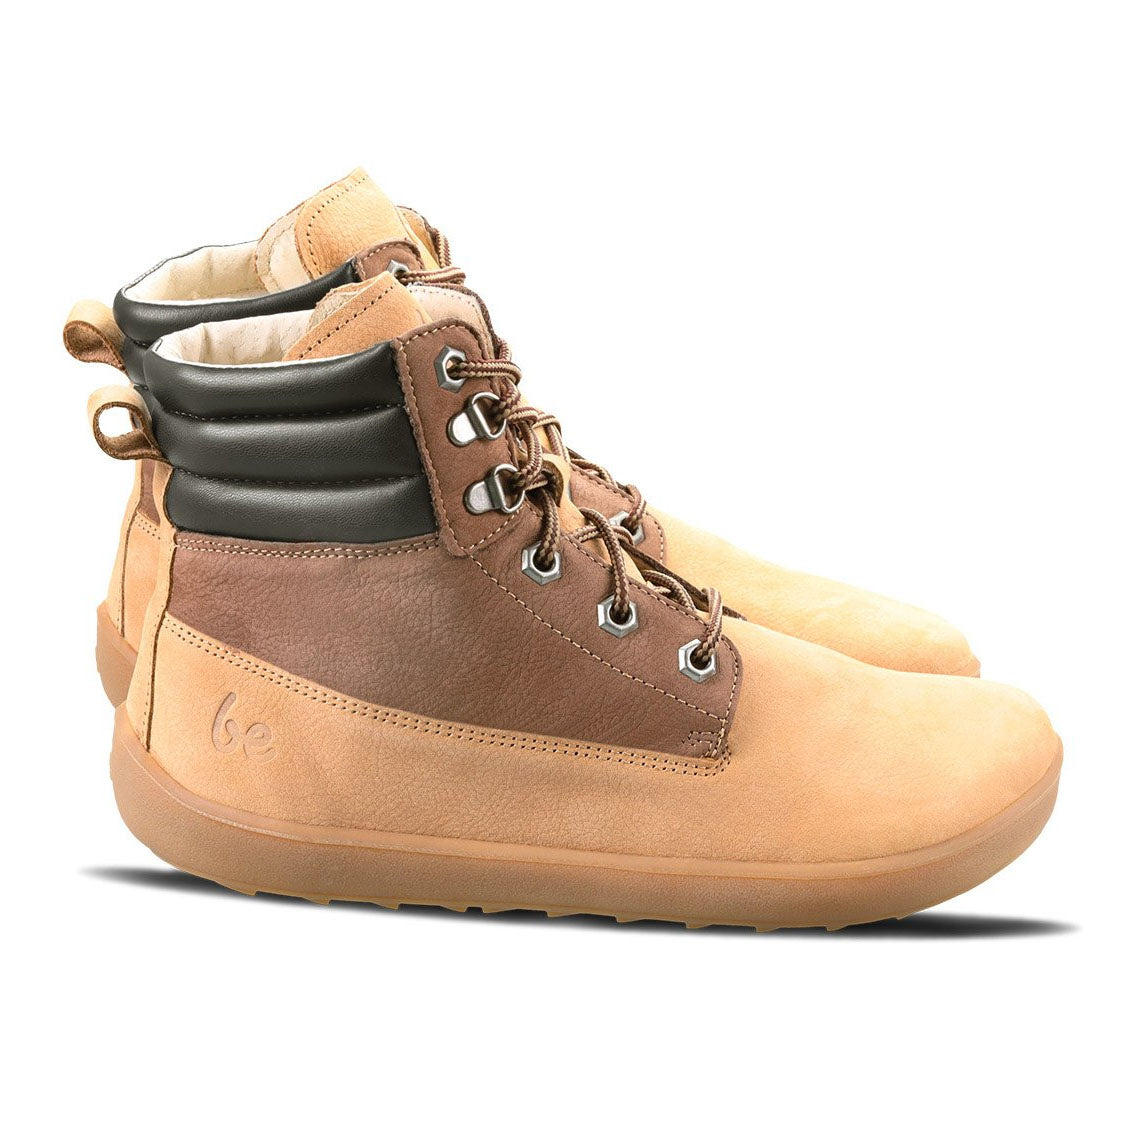 Be Lenka Nevada Neo Rugged Barefoot Boots - Sand & Dark Brown 42 - Like New